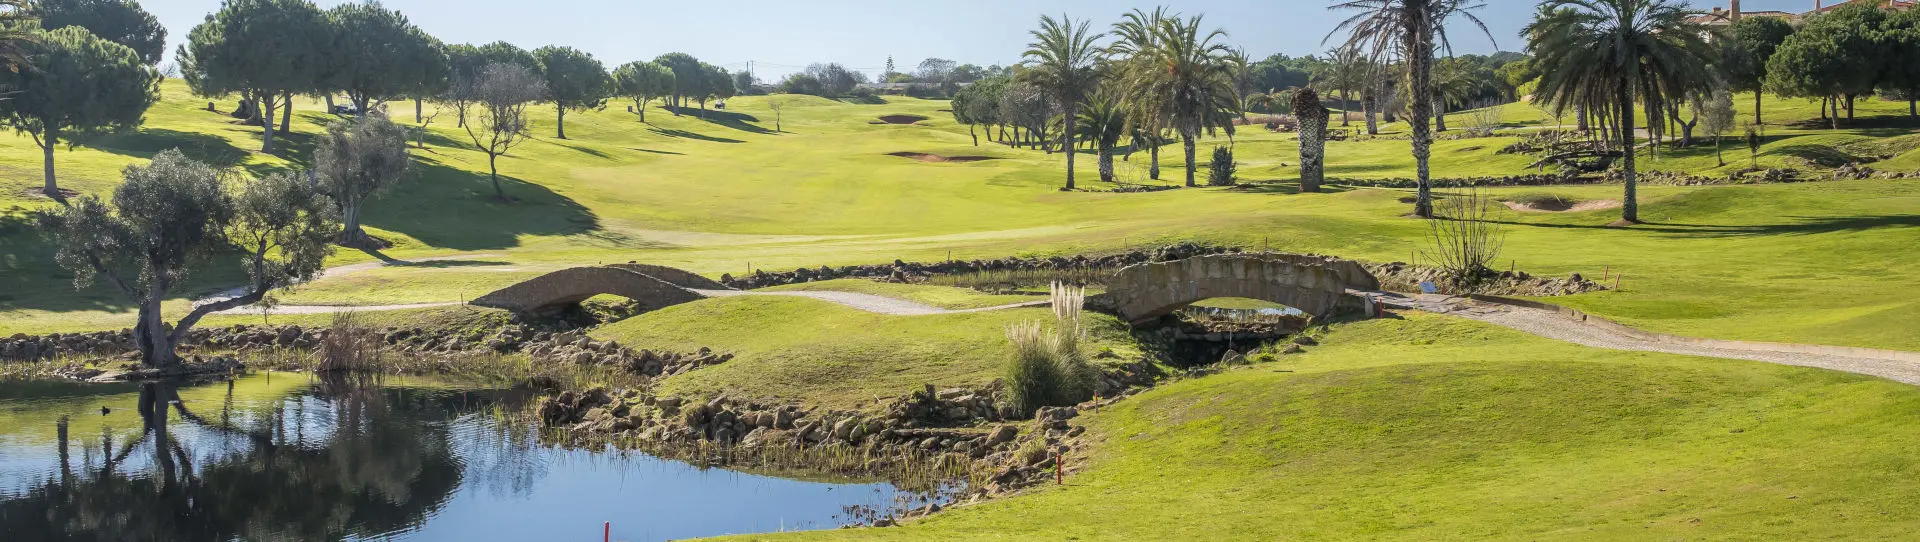 Portugal golf holidays - Boavista Golf & Spa Resort - Photo 3